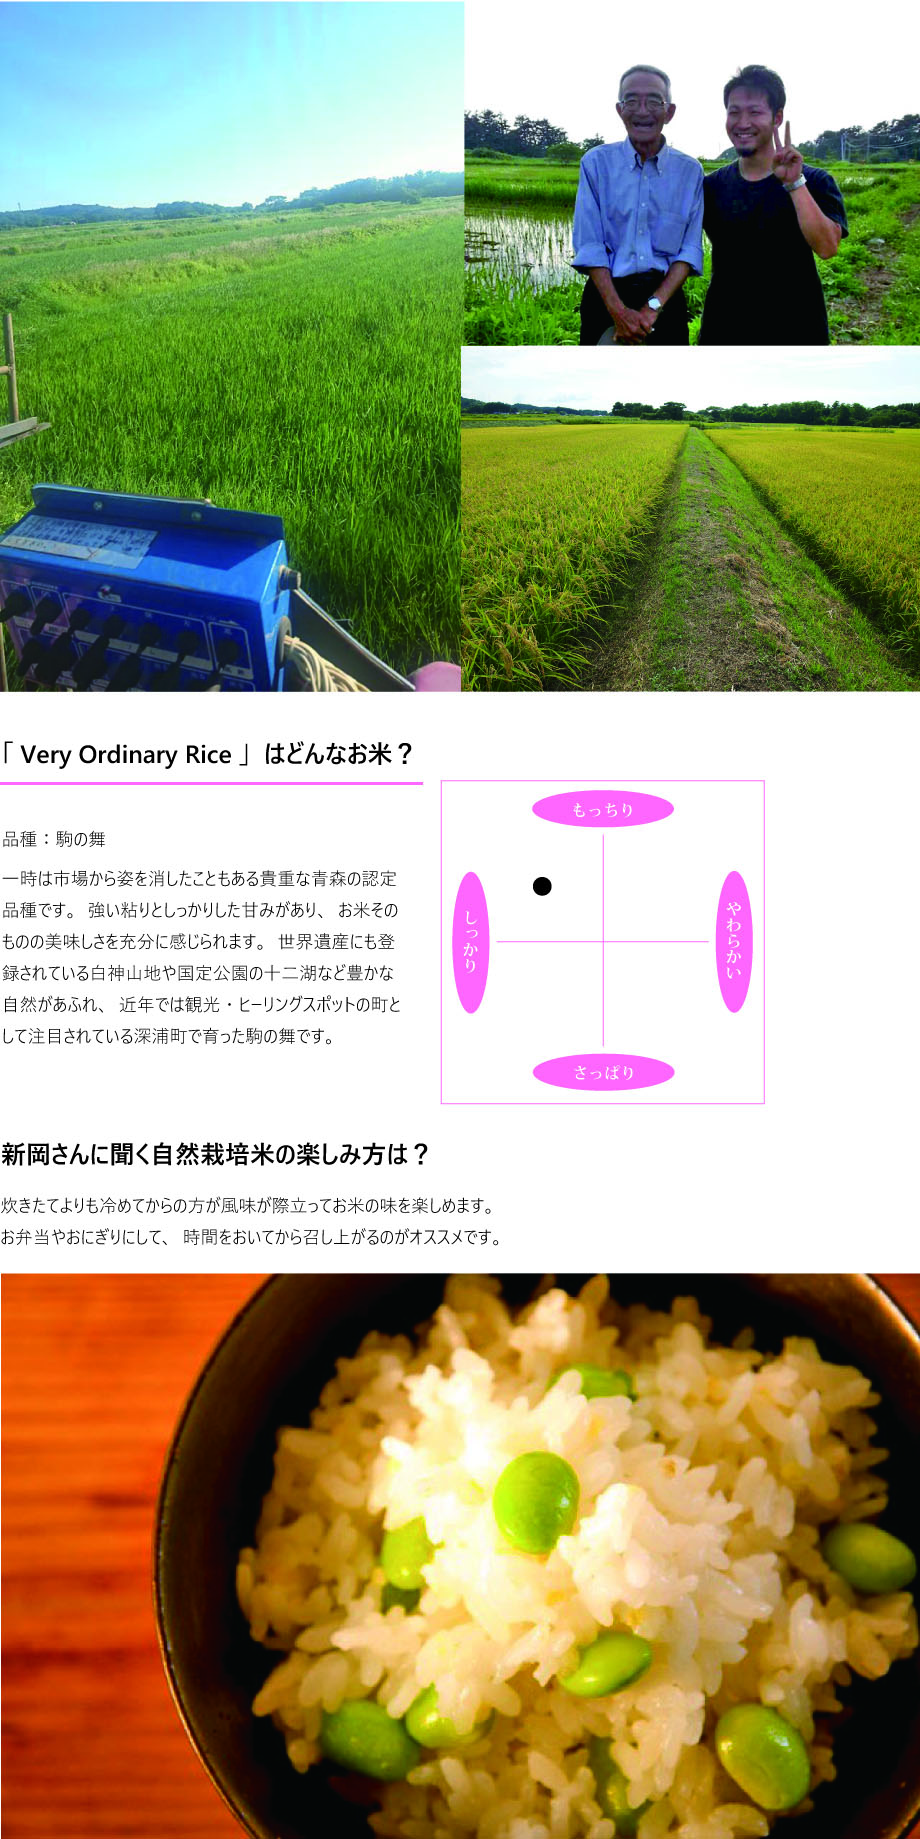 (R03産)Very Ordinary Rice玄米1kg